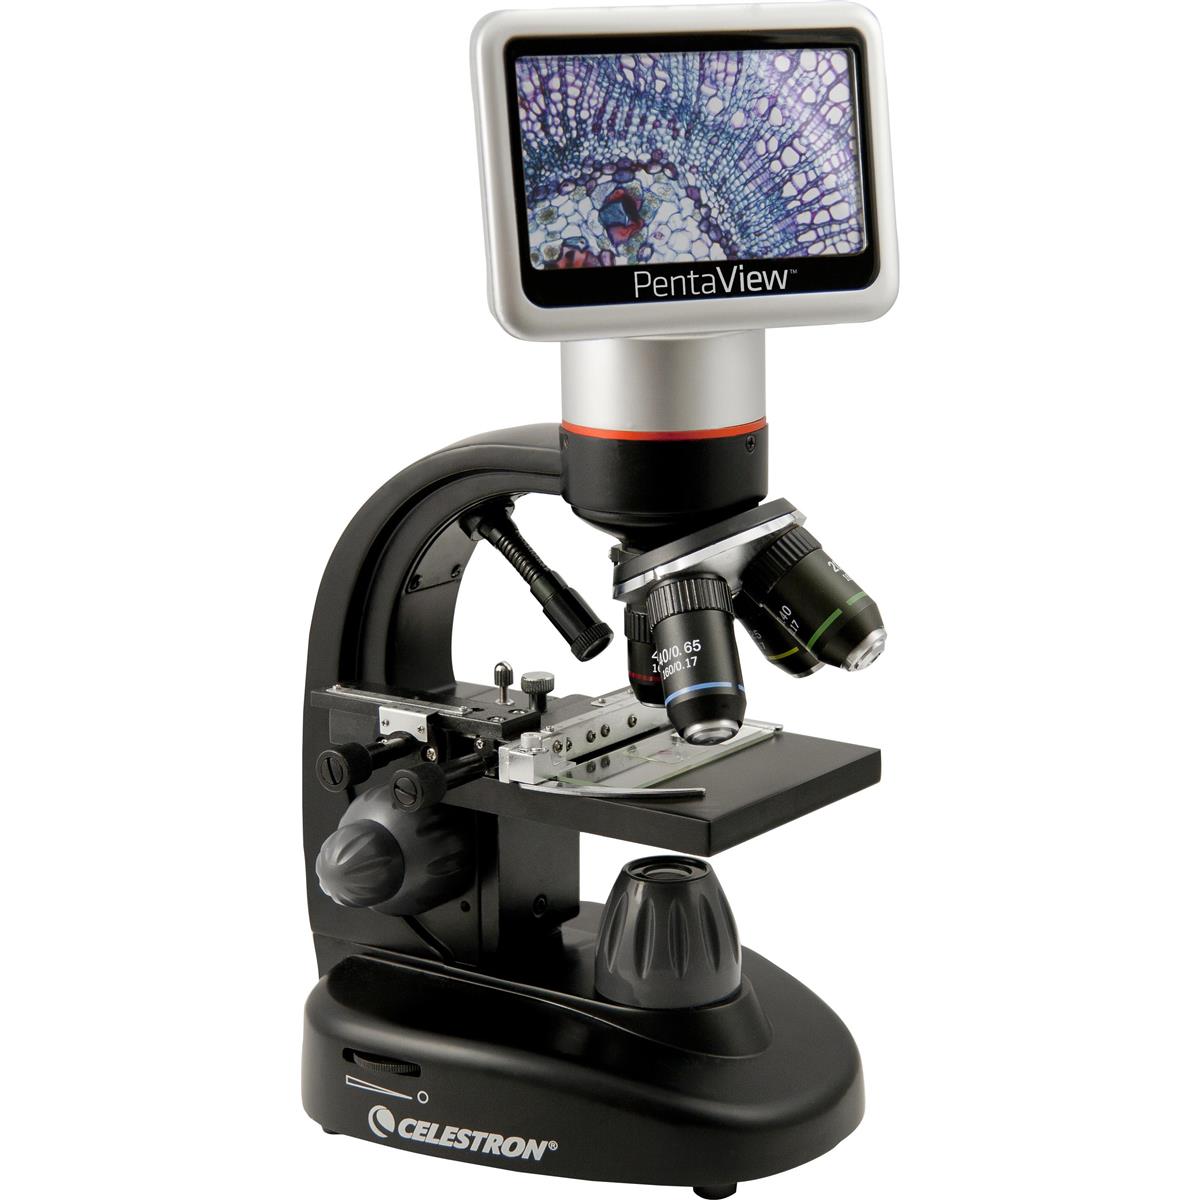 Image of Celestron PentaView LCD Digital Microscope